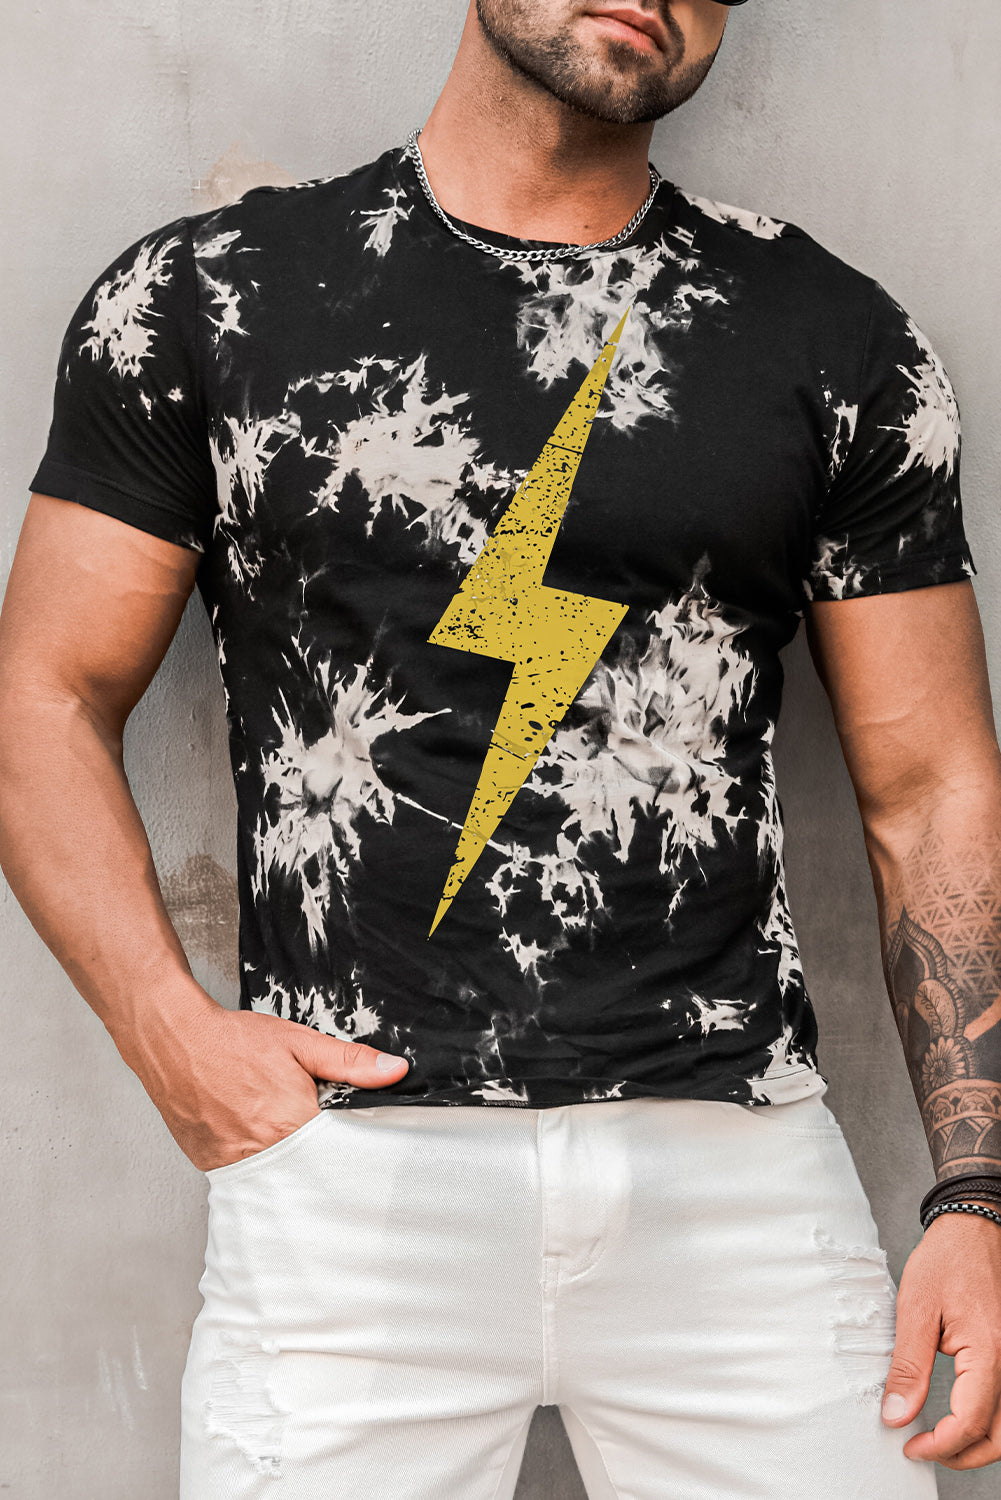 Black Men's Lightning Tie Dye Print Short Sleeve T-shirt Black 100%Cotton Men's Tops JT's Designer Fashion